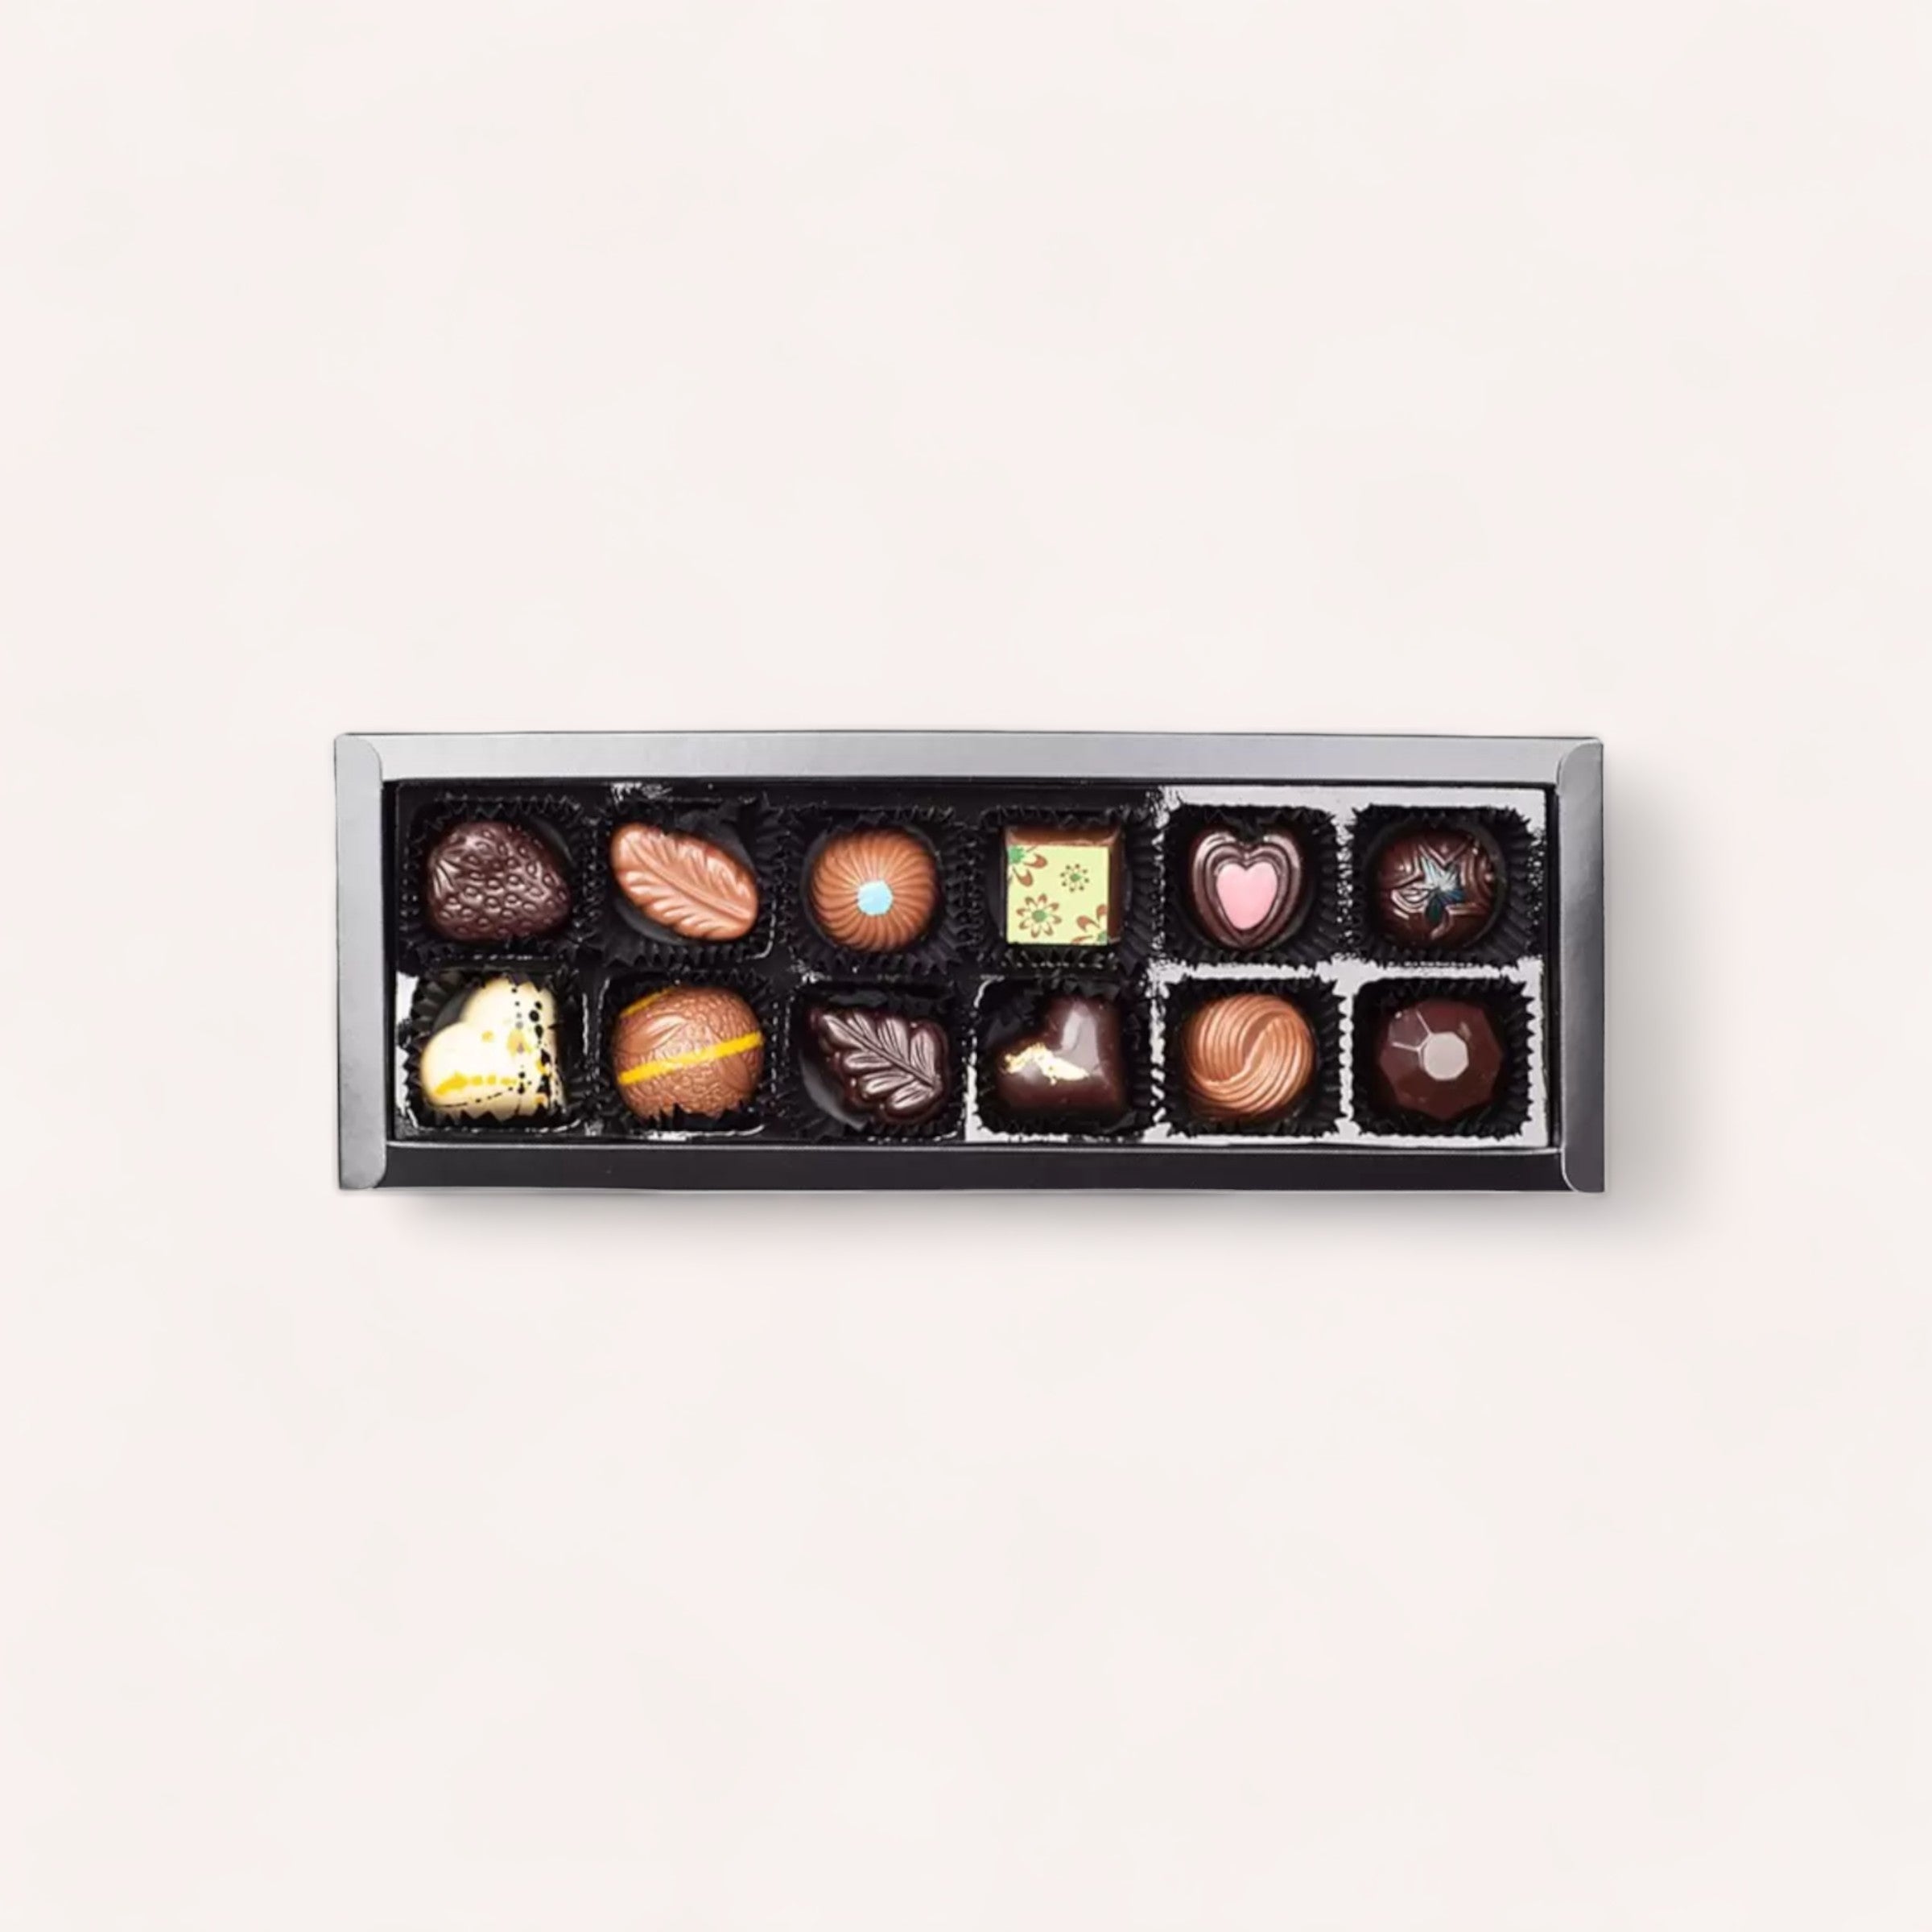 Delicious handmade chocolates in a box